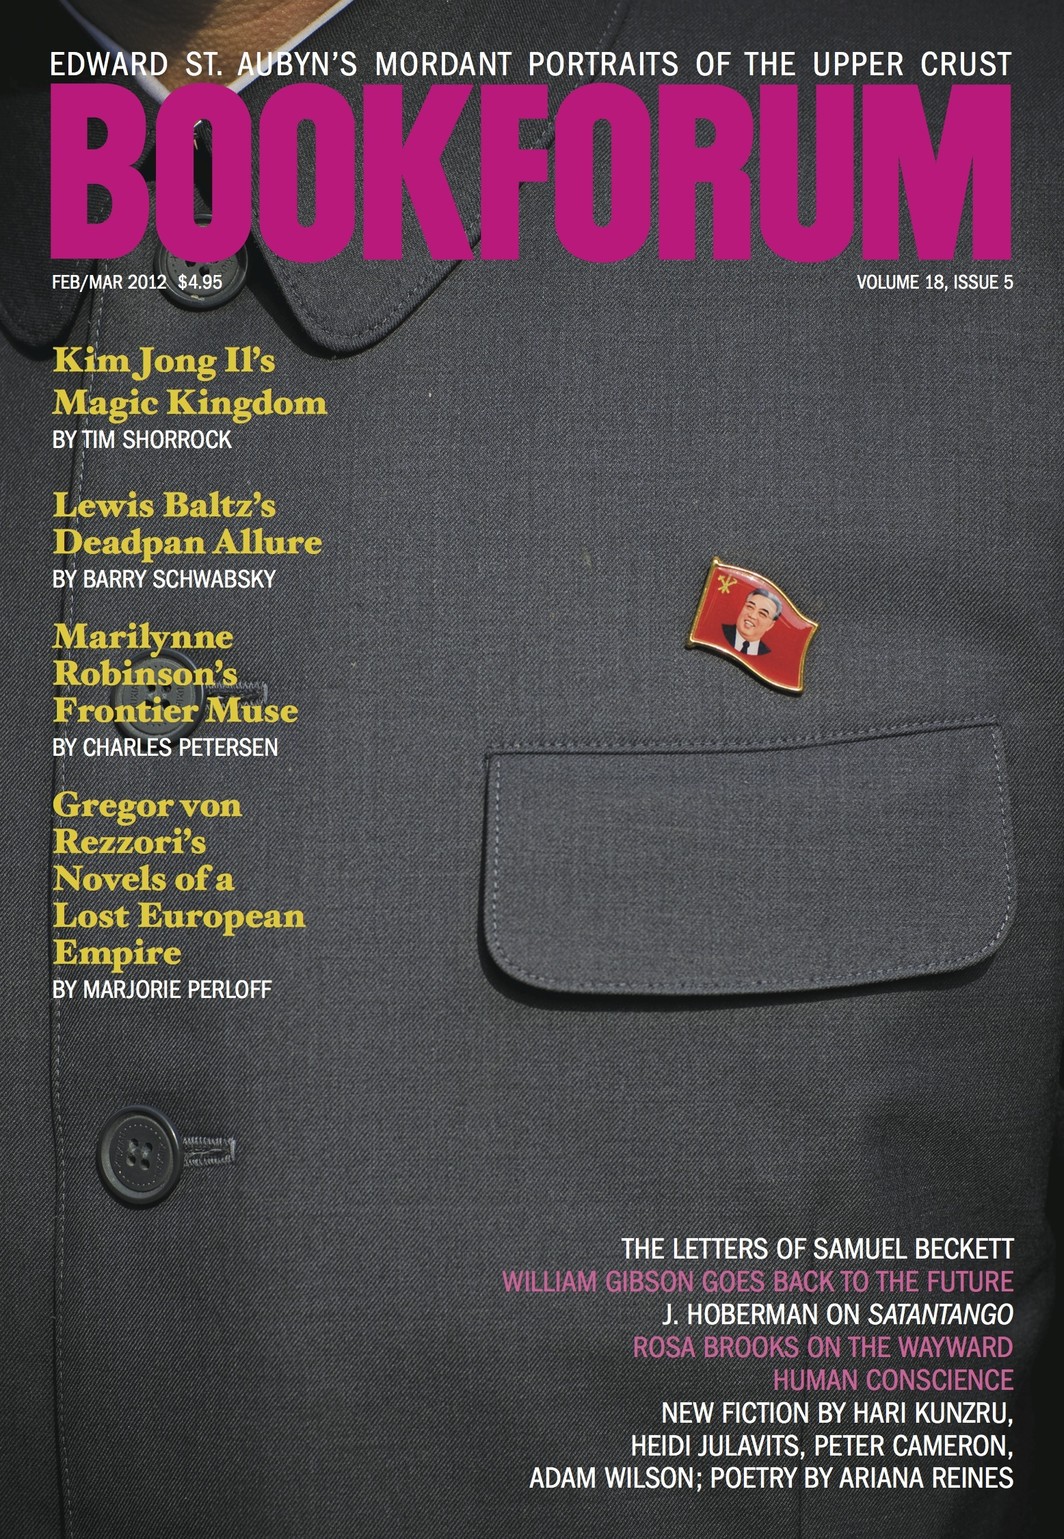 Cover of Feb/Mar 2012